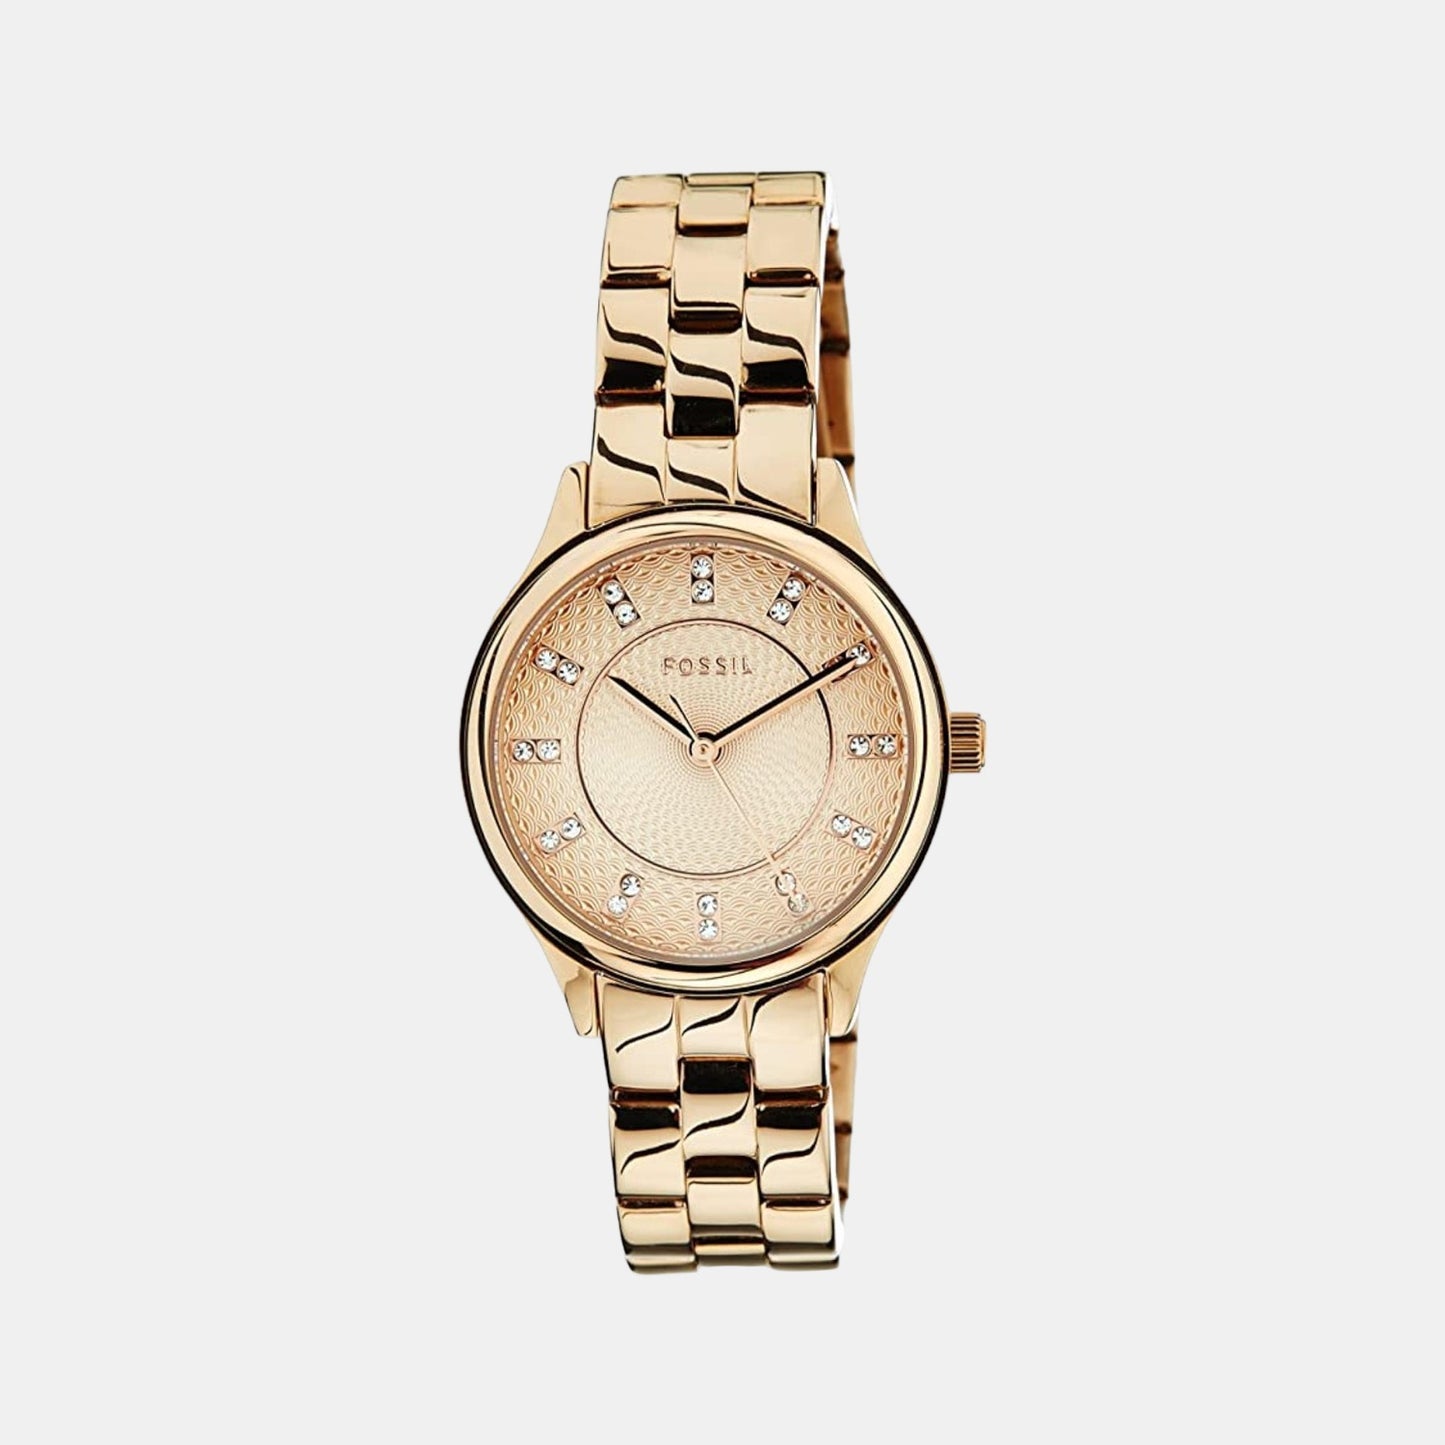 Female Rose Gold Analog Stainless Steel Watch BQ1571